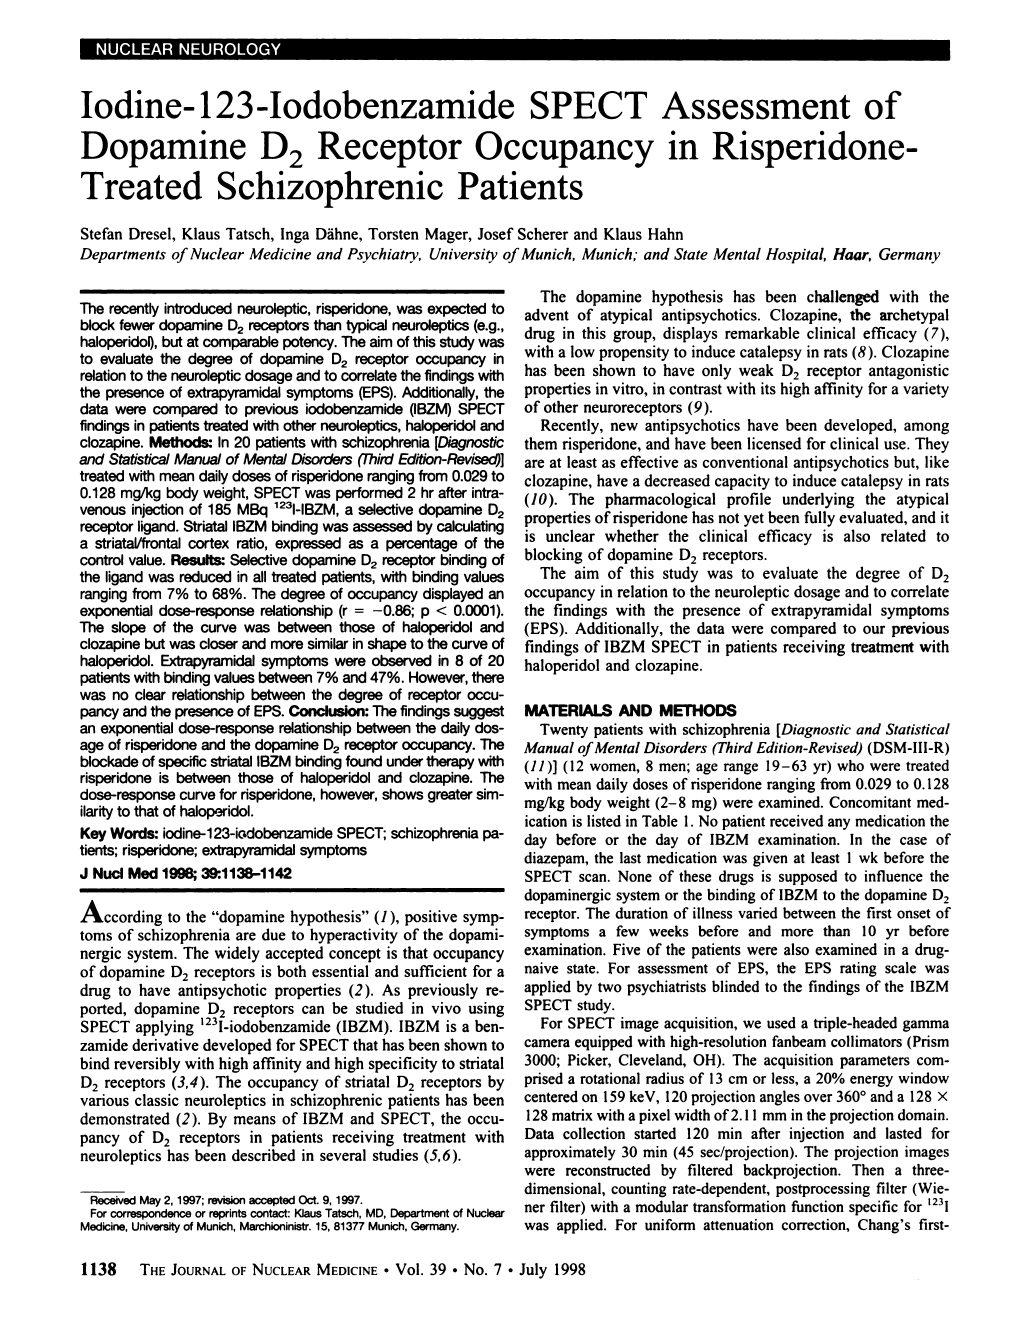 Iodine-123-Iodobenzamide SPECT Assessment of Dopamine D2 Receptor Occupancy in Risperidone